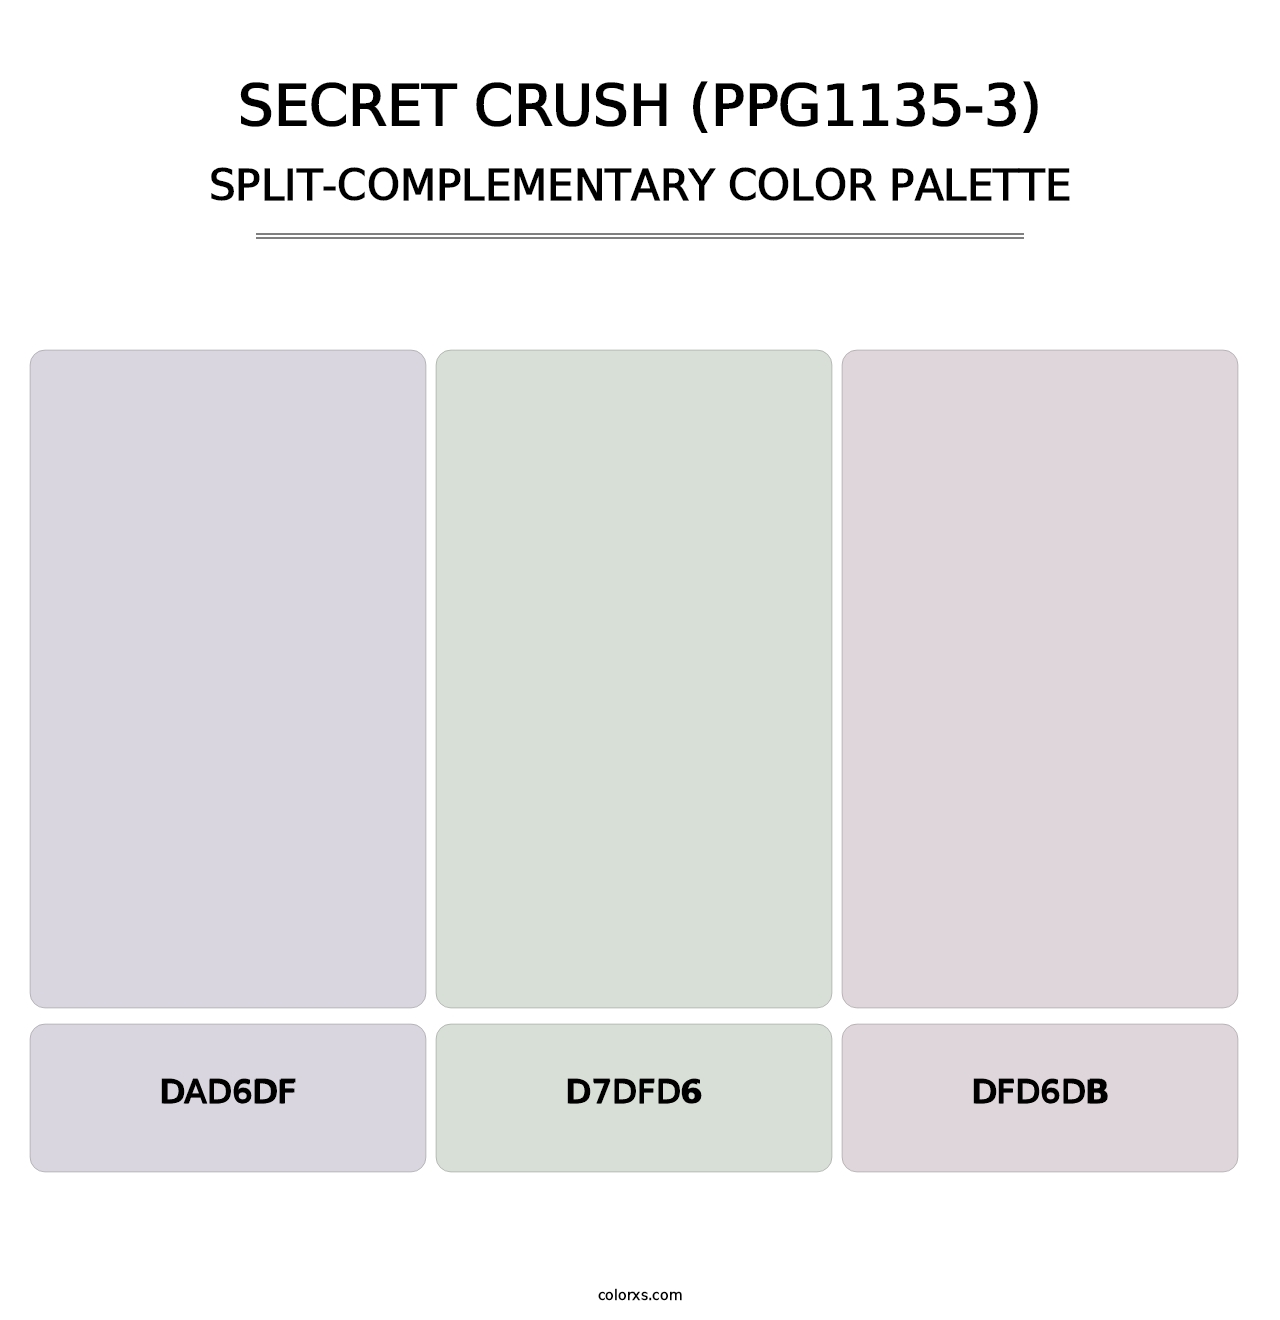 Secret Crush (PPG1135-3) - Split-Complementary Color Palette